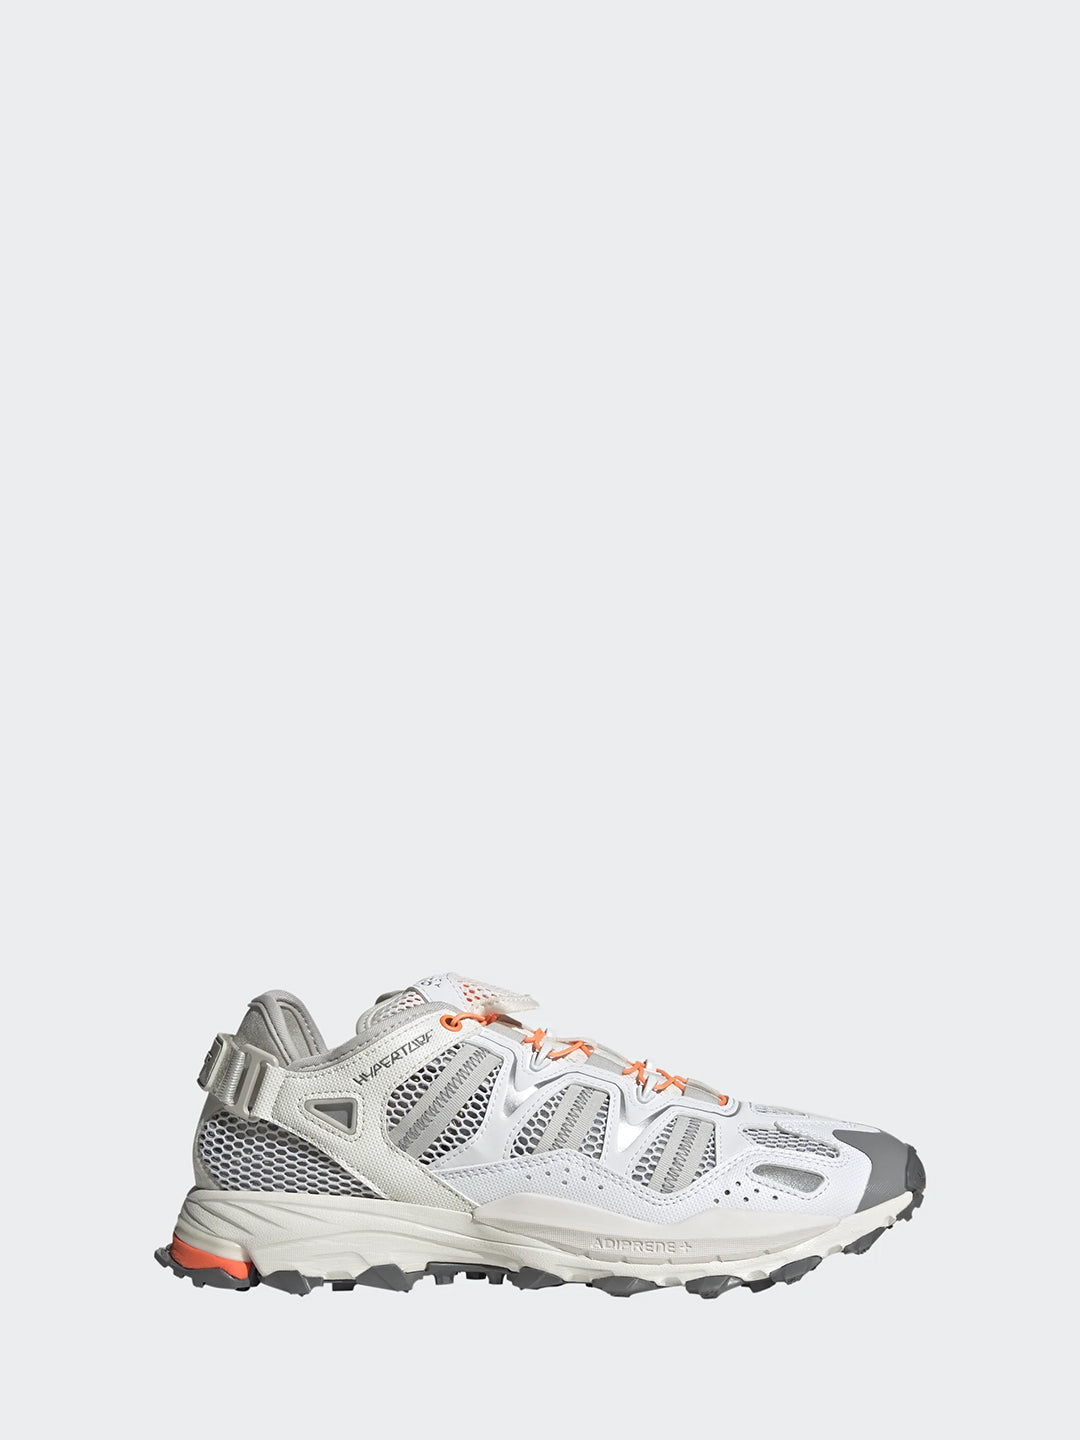 Adidas Hyperturf white, gray and orange sneakers